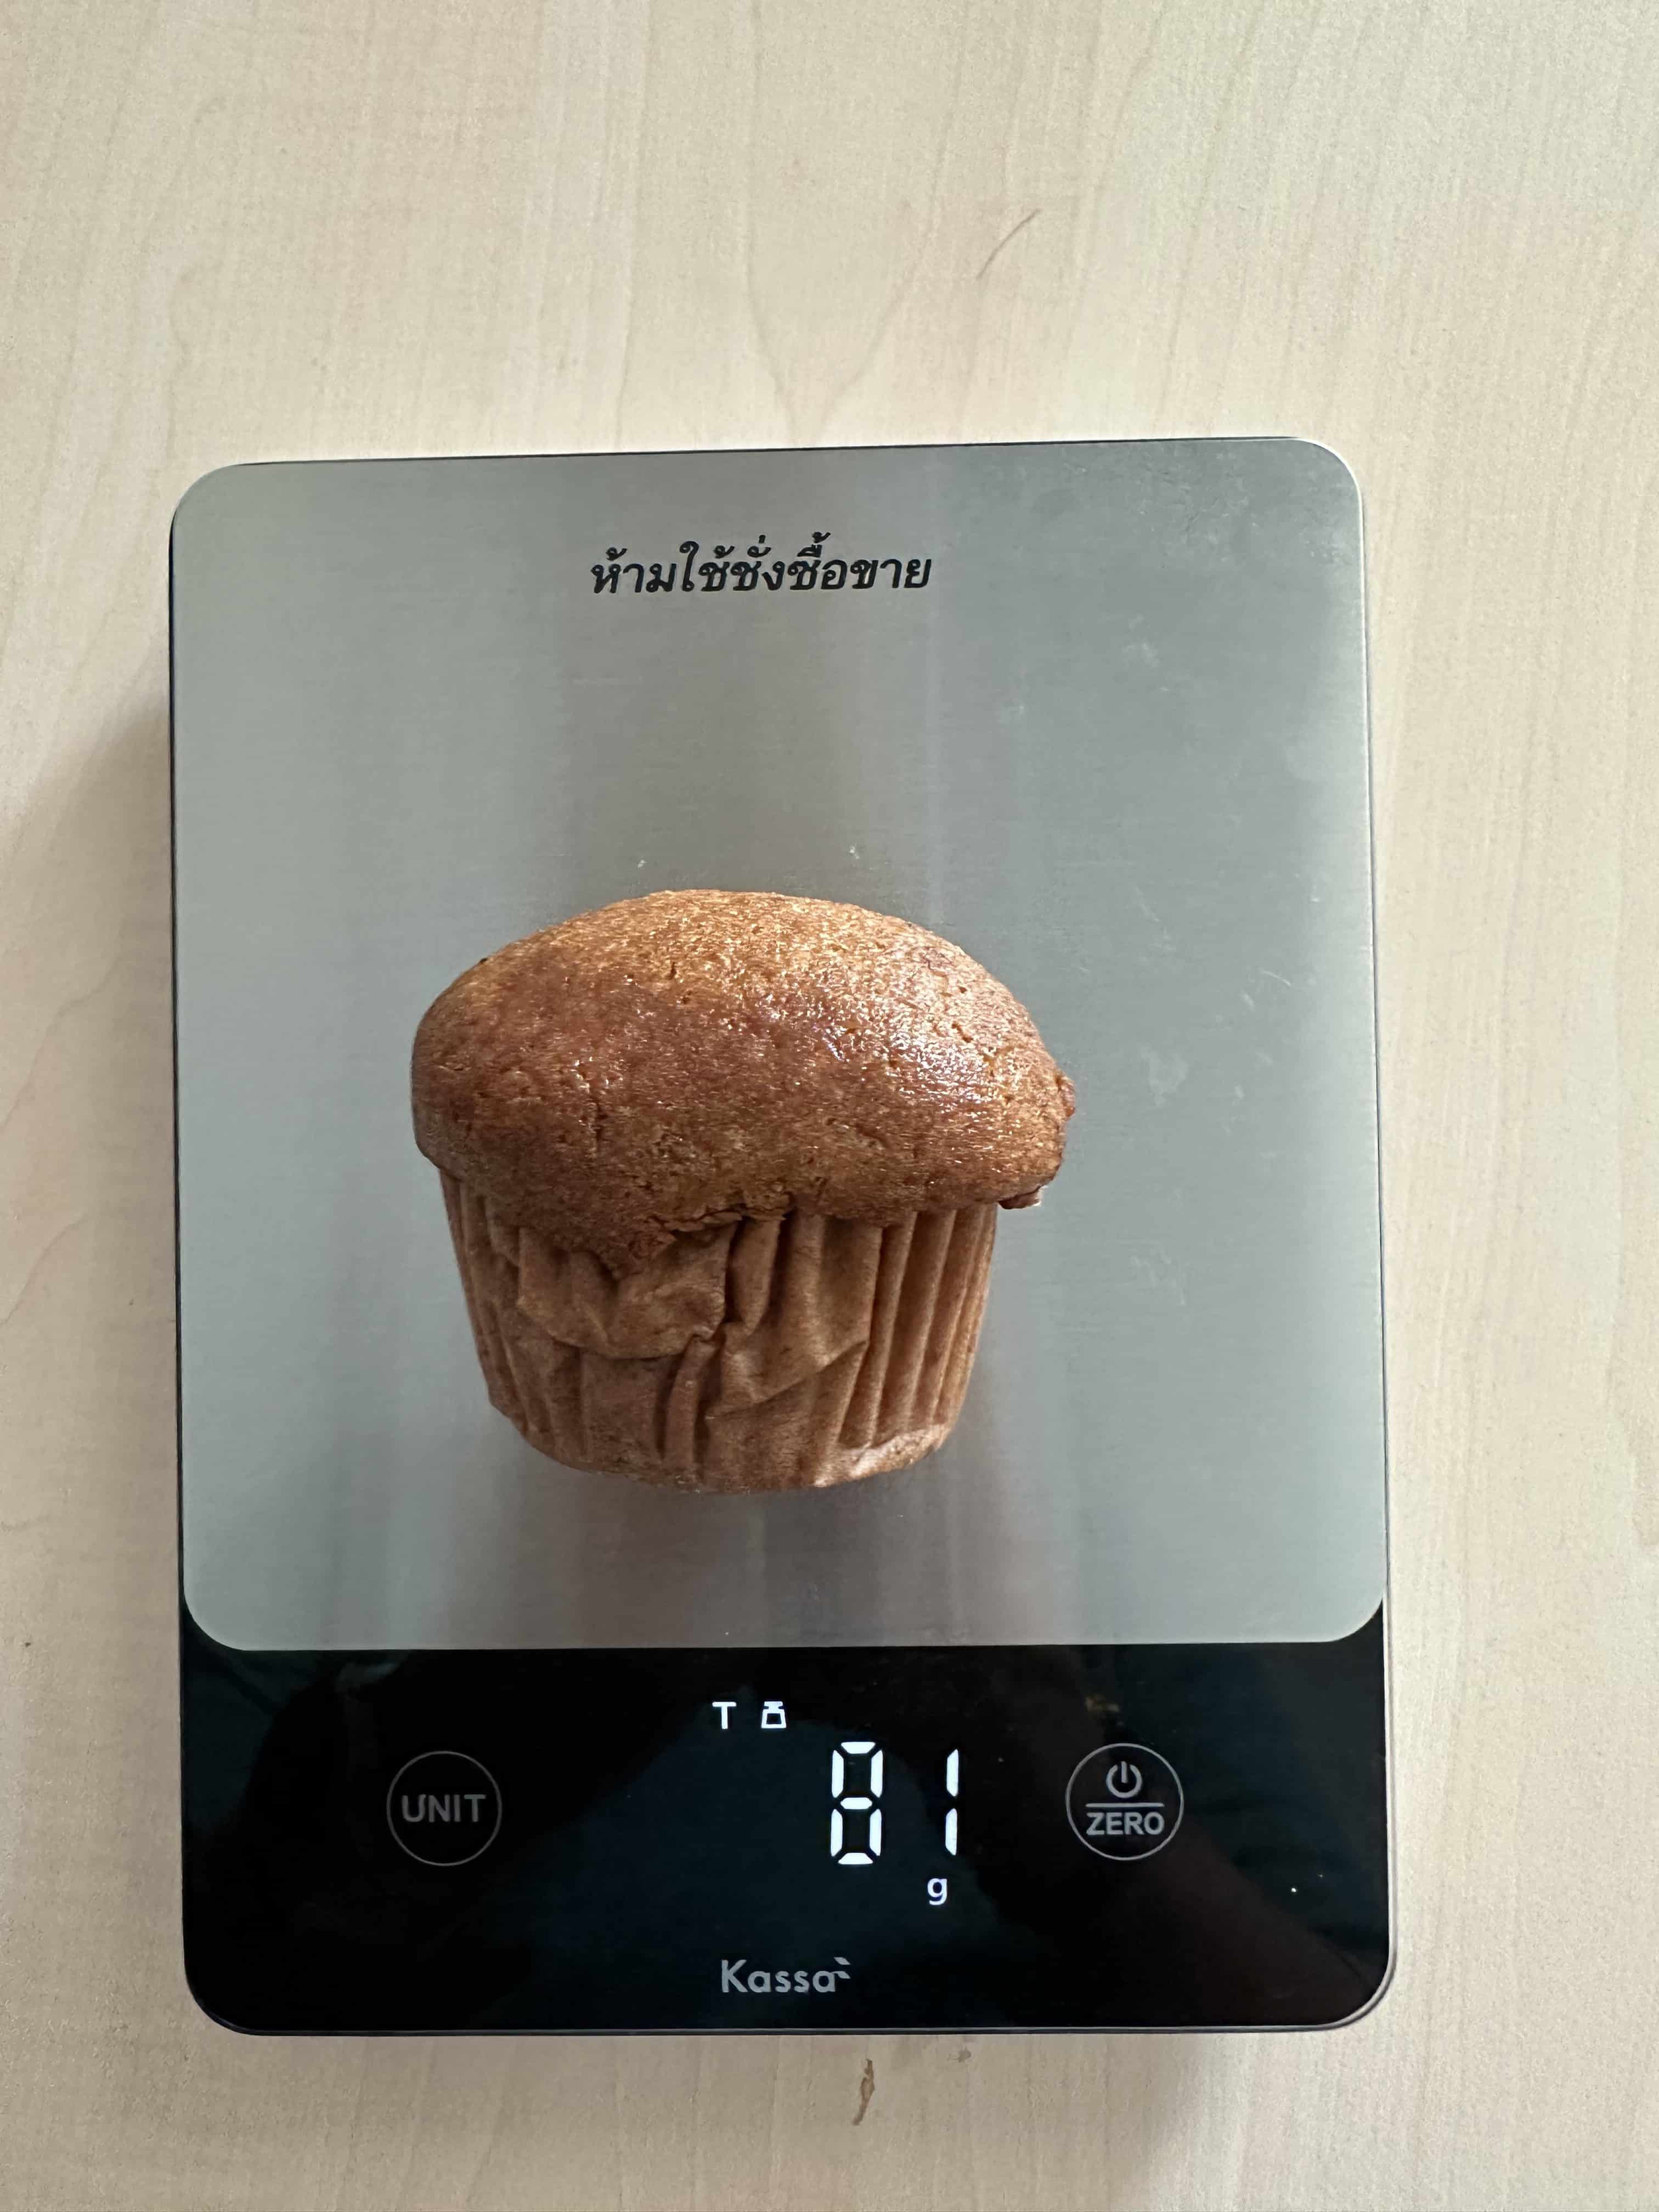 Kui palju kaalub muffin?